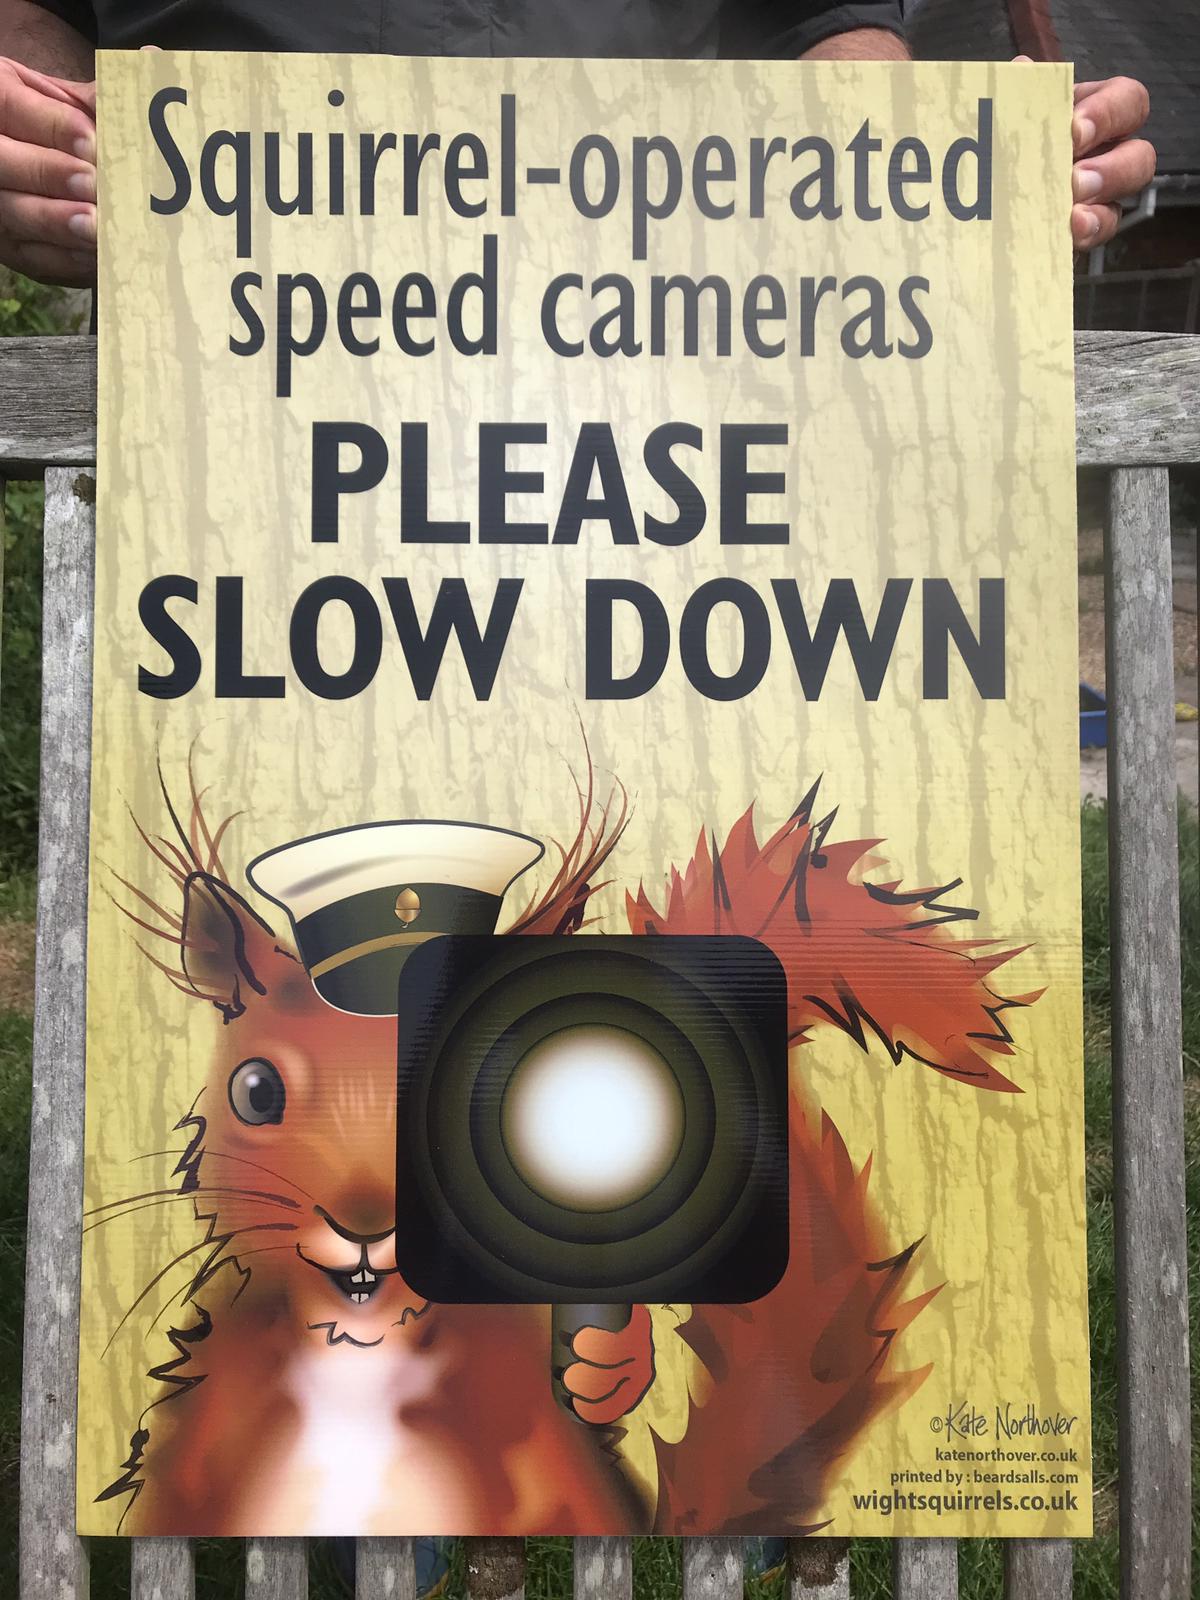 //iowredsquirreltrust.co.uk/wp-content/uploads/2022/05/PLEASE-SLOW-DOWN-Squirrel-Sign.jpeg)